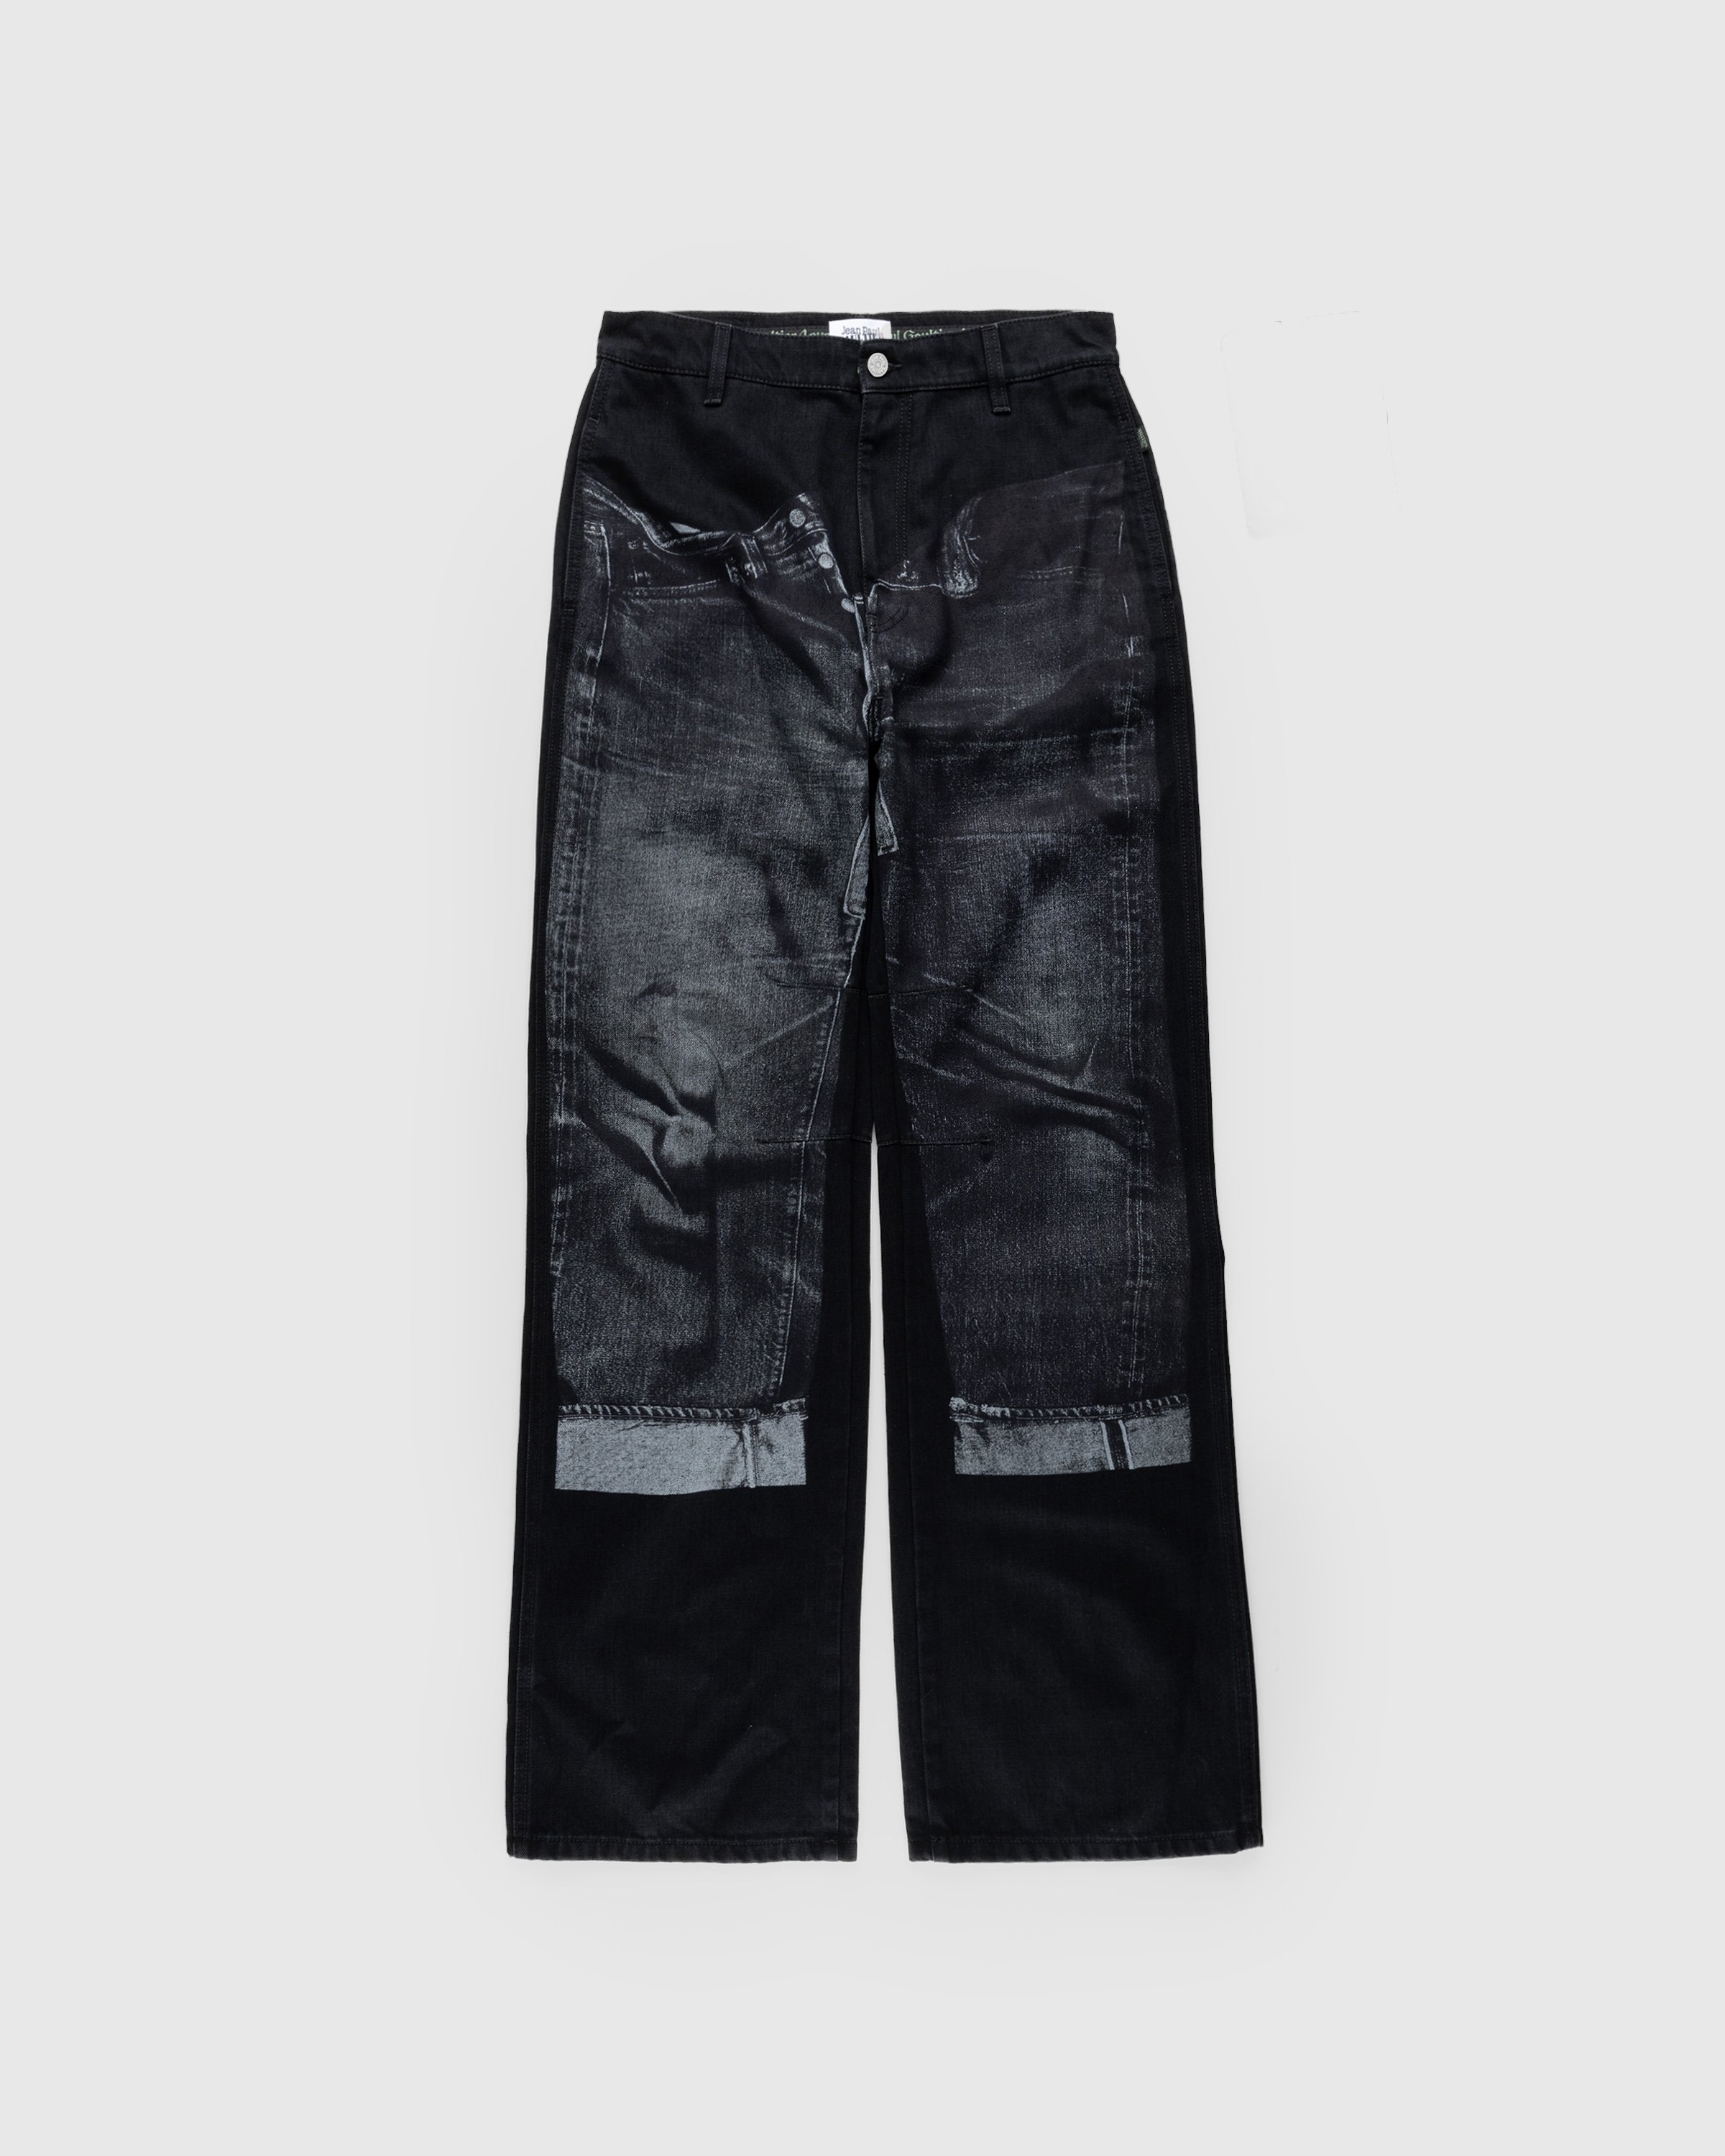 Jean Paul Gaultier - Denim Trompe L'oeil Jeans Black/Gray - Clothing - Black - Image 1